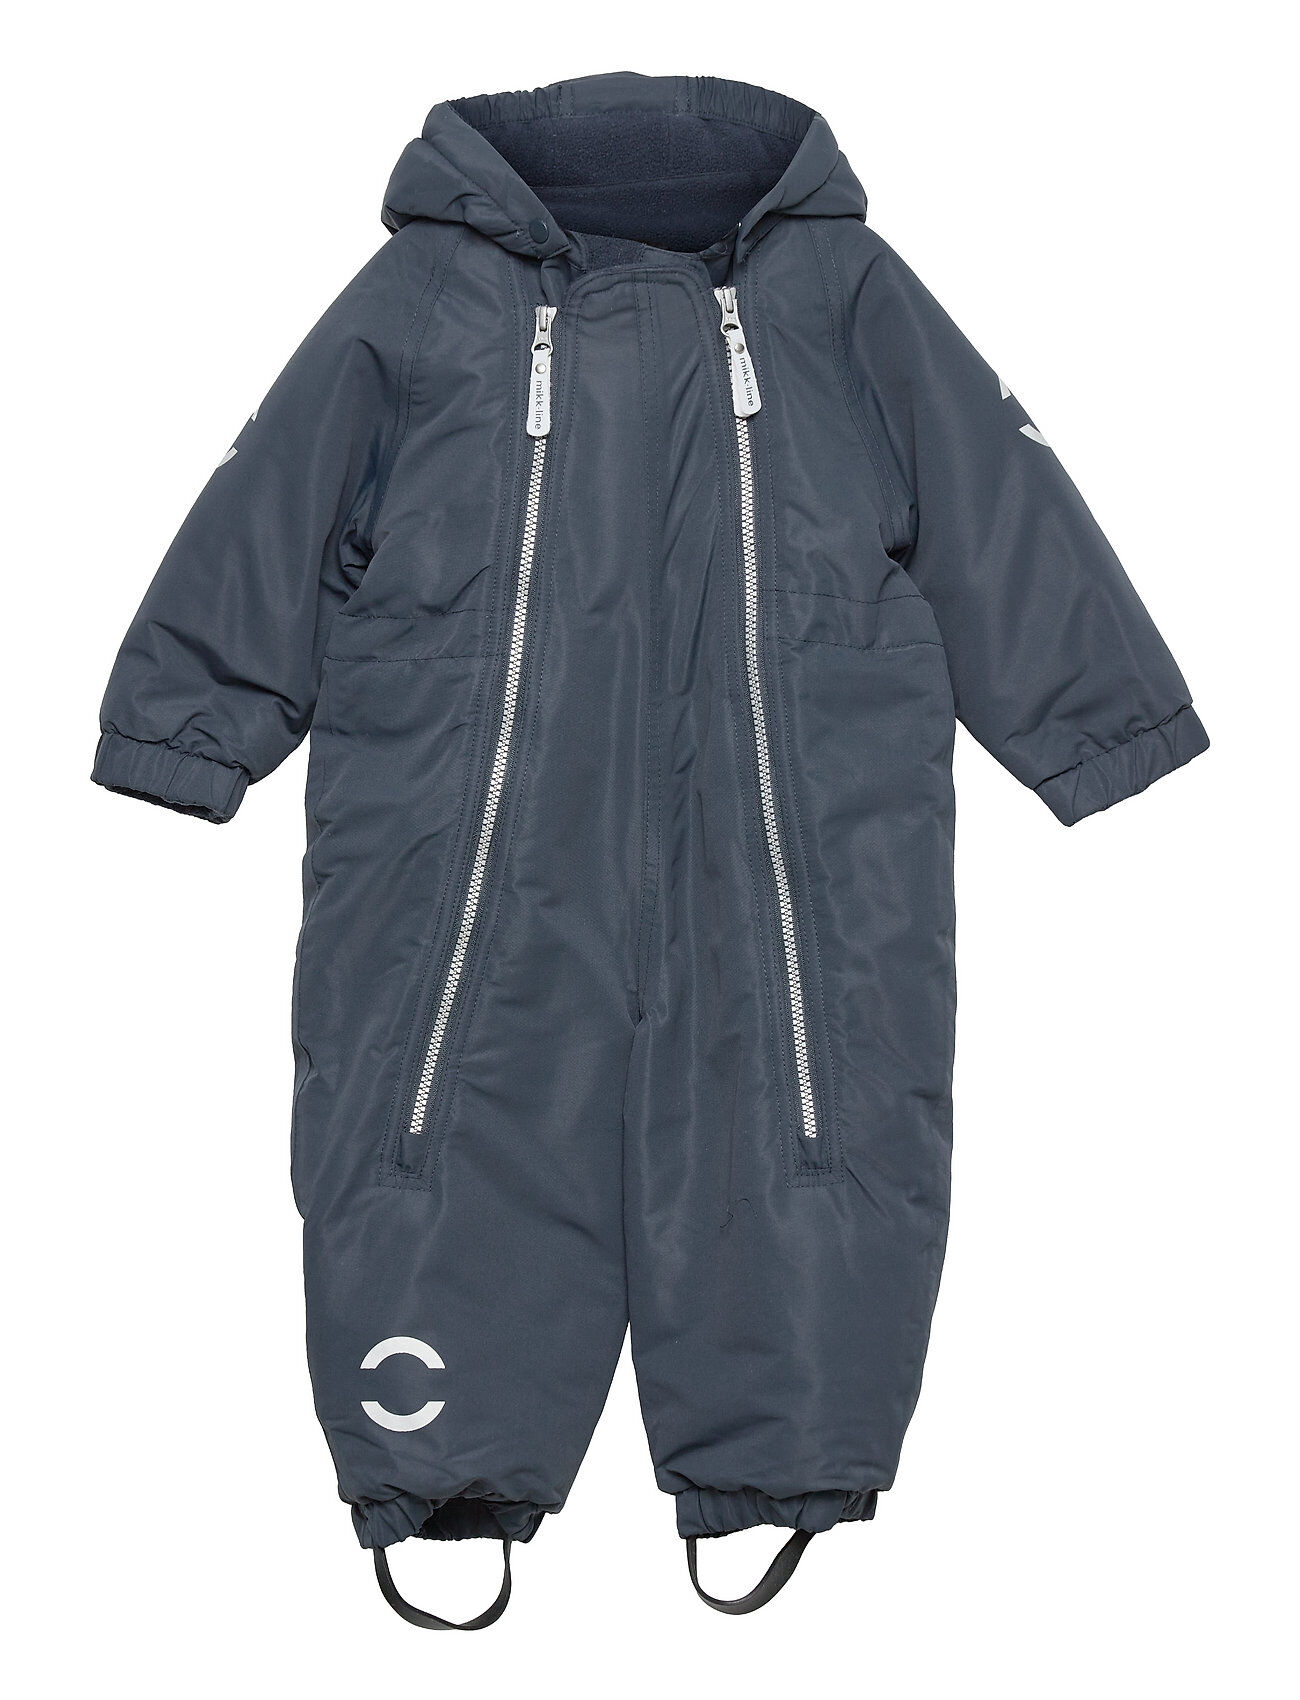 Mikk-Line Snow Suit Baby Outerwear Coveralls Snow/ski Coveralls & Sets Blå Mikk-Line